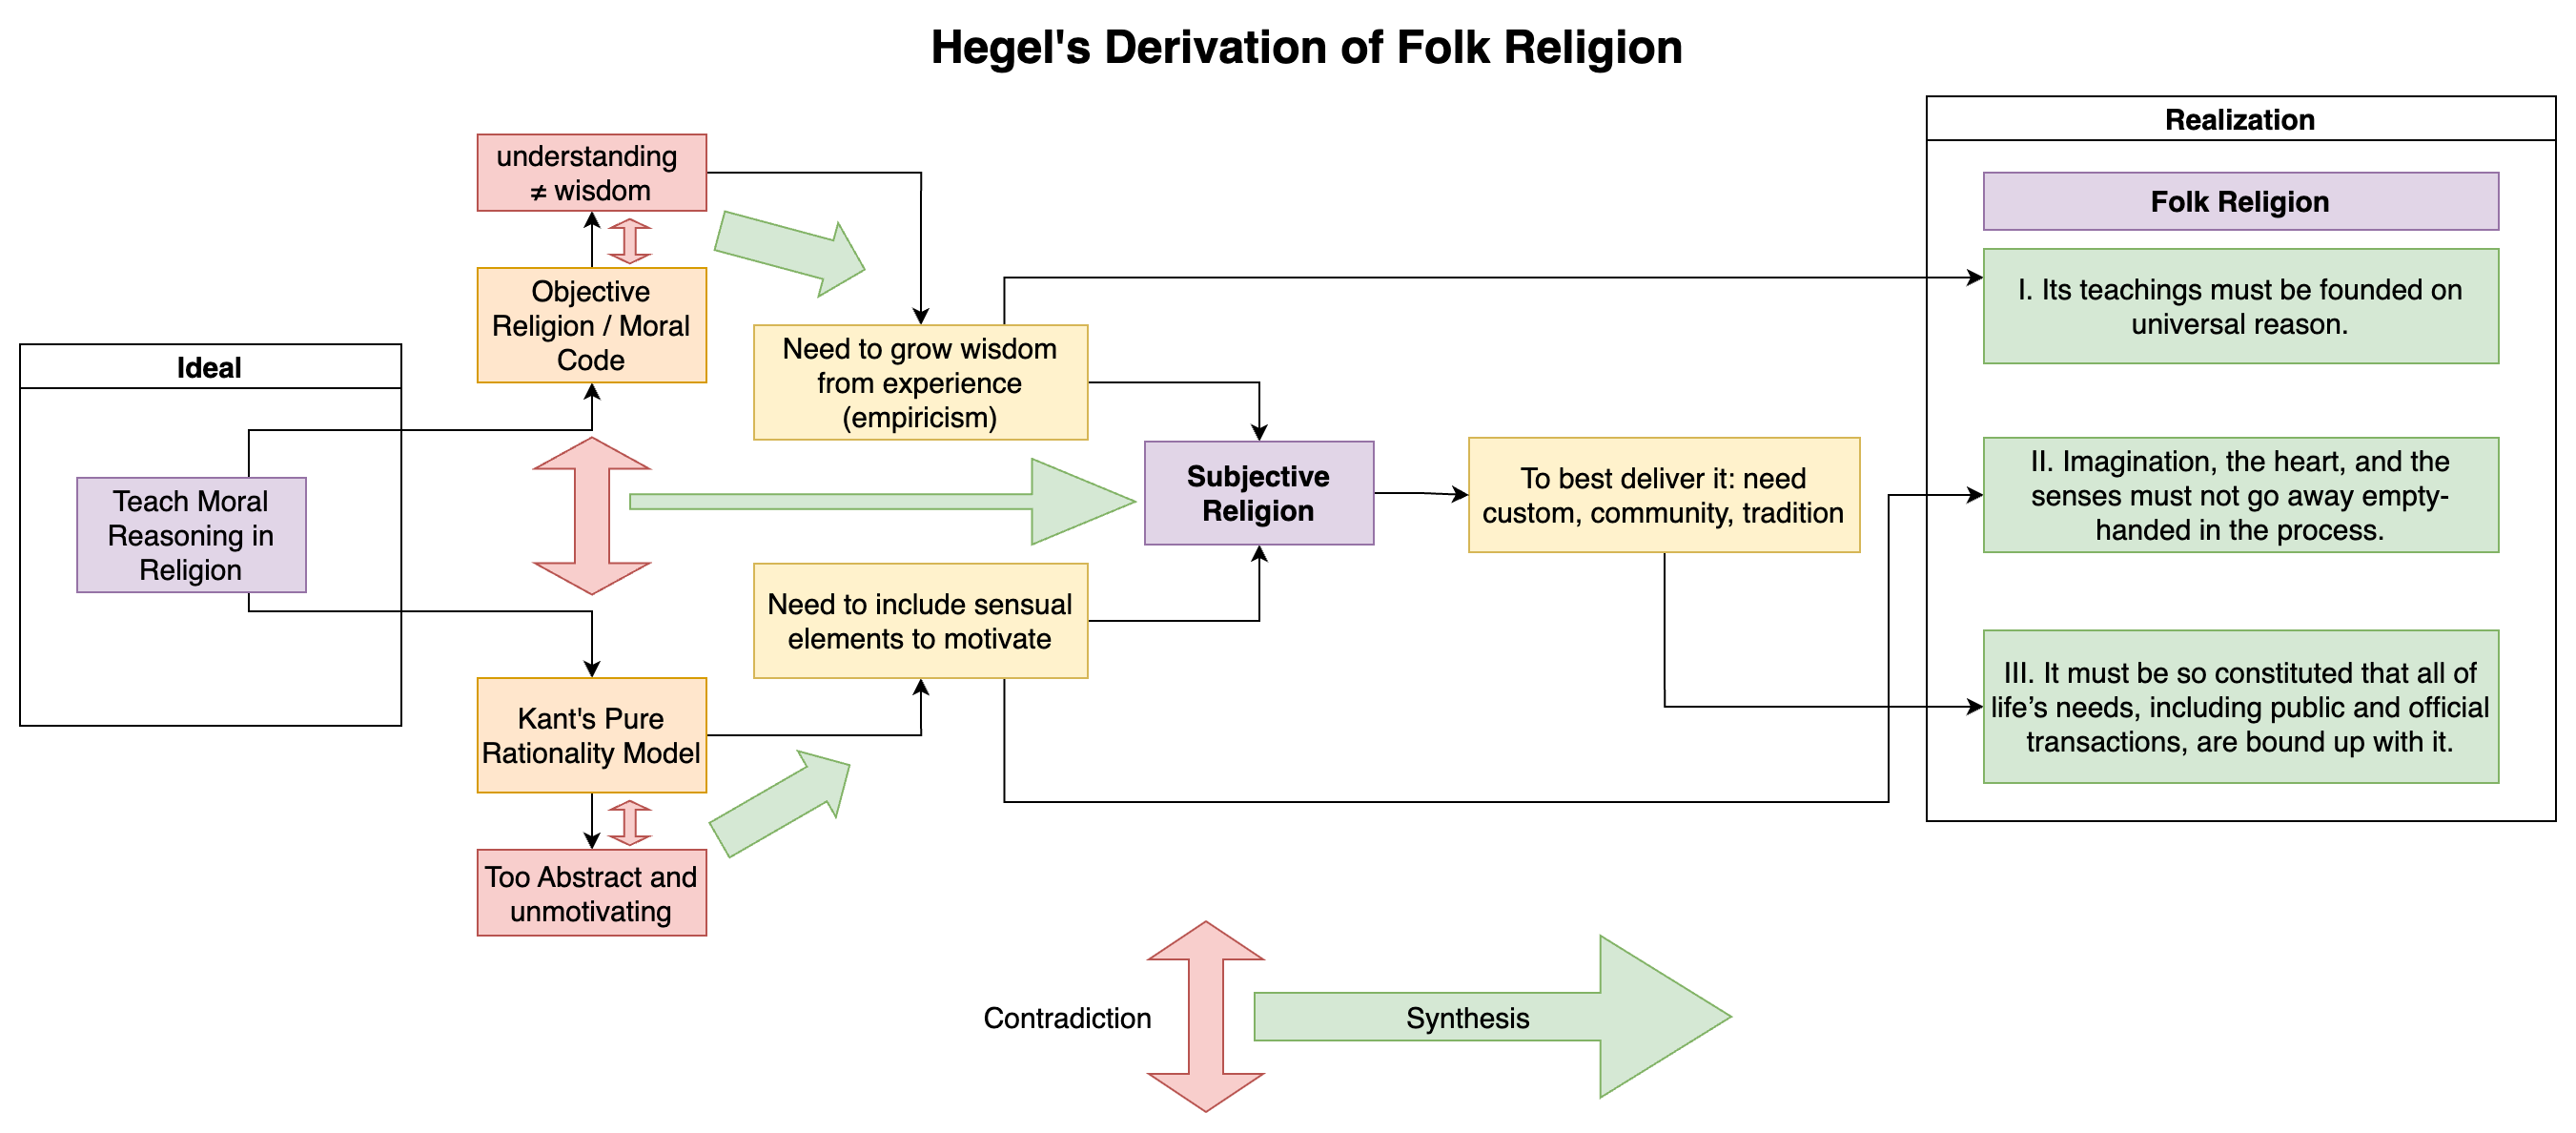 Hegel's Derivation of Folk Religion